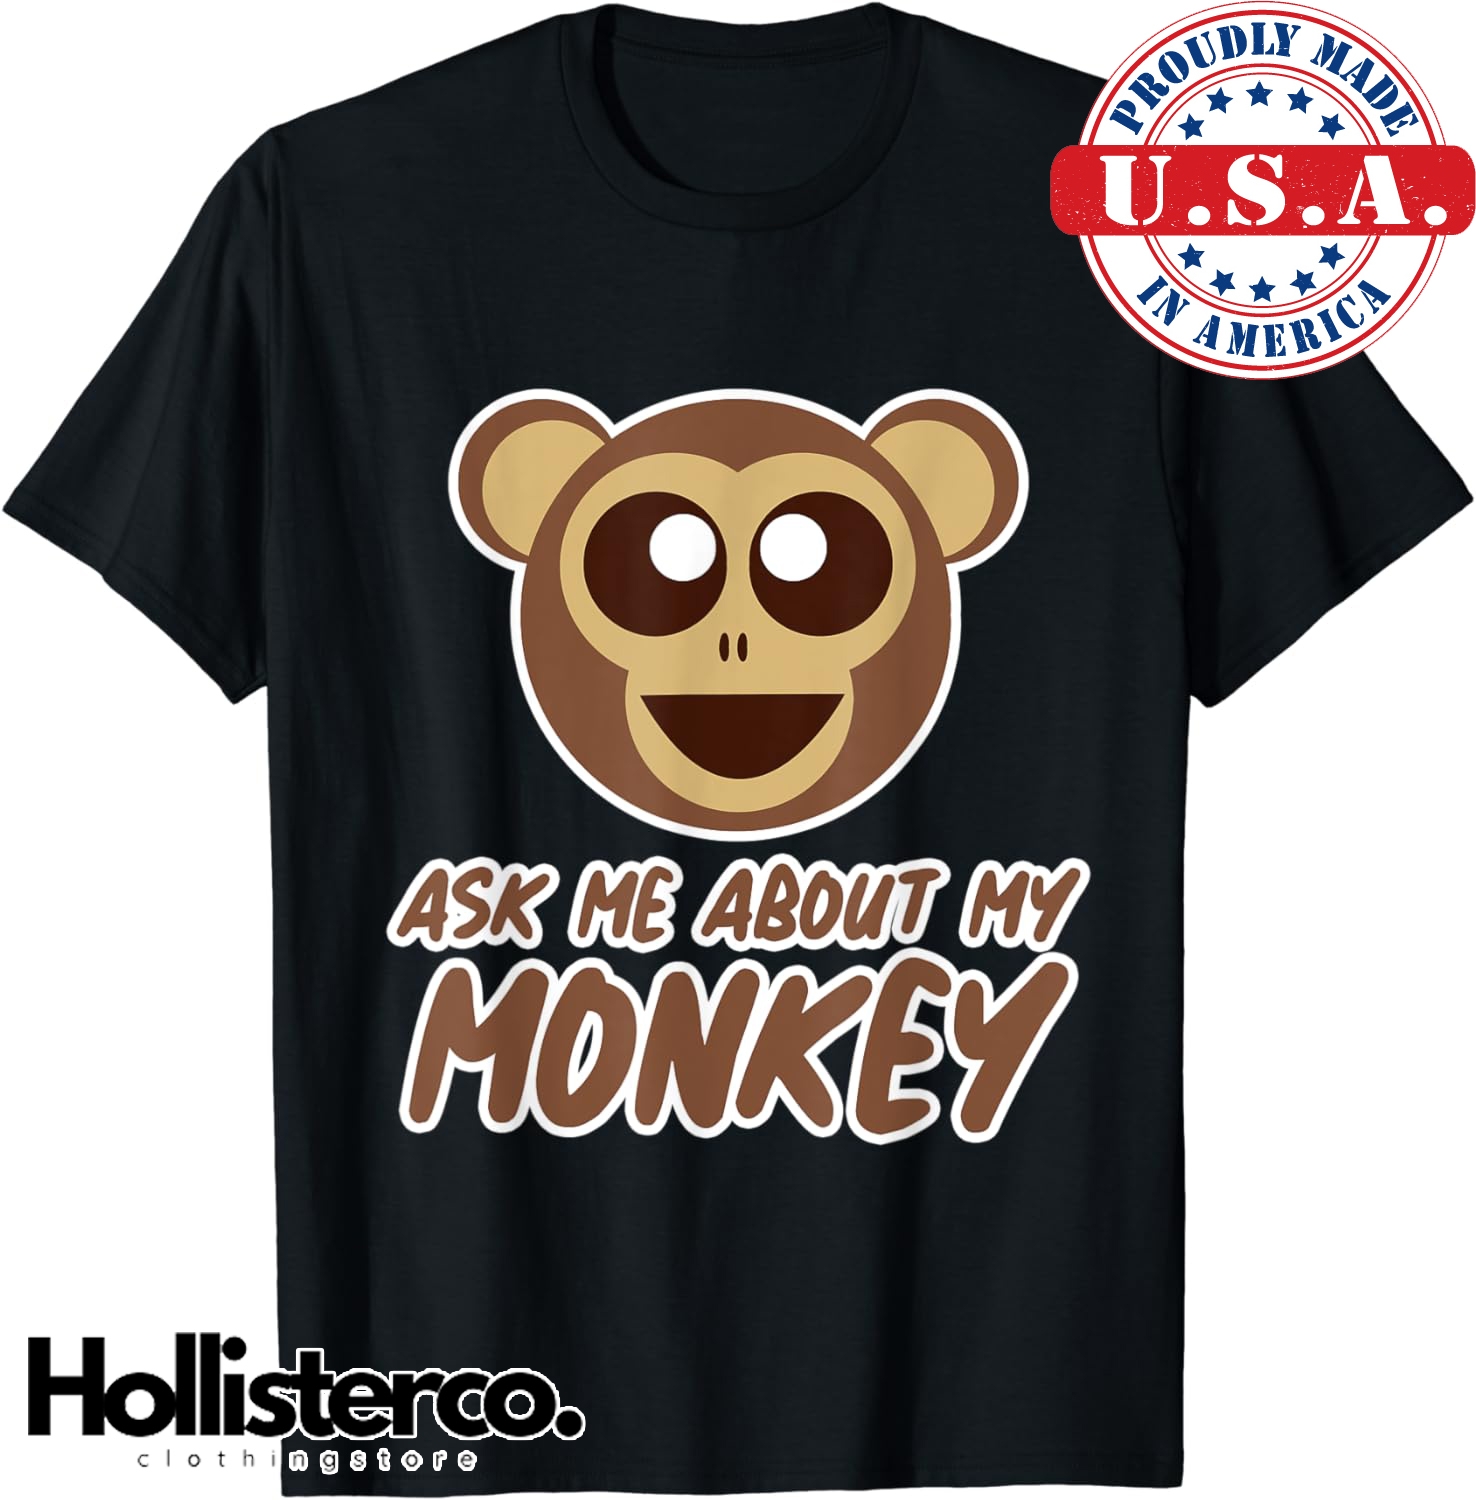 Zoo Shirt for Animal Friends â Ask me about my Monkey T-Shirt